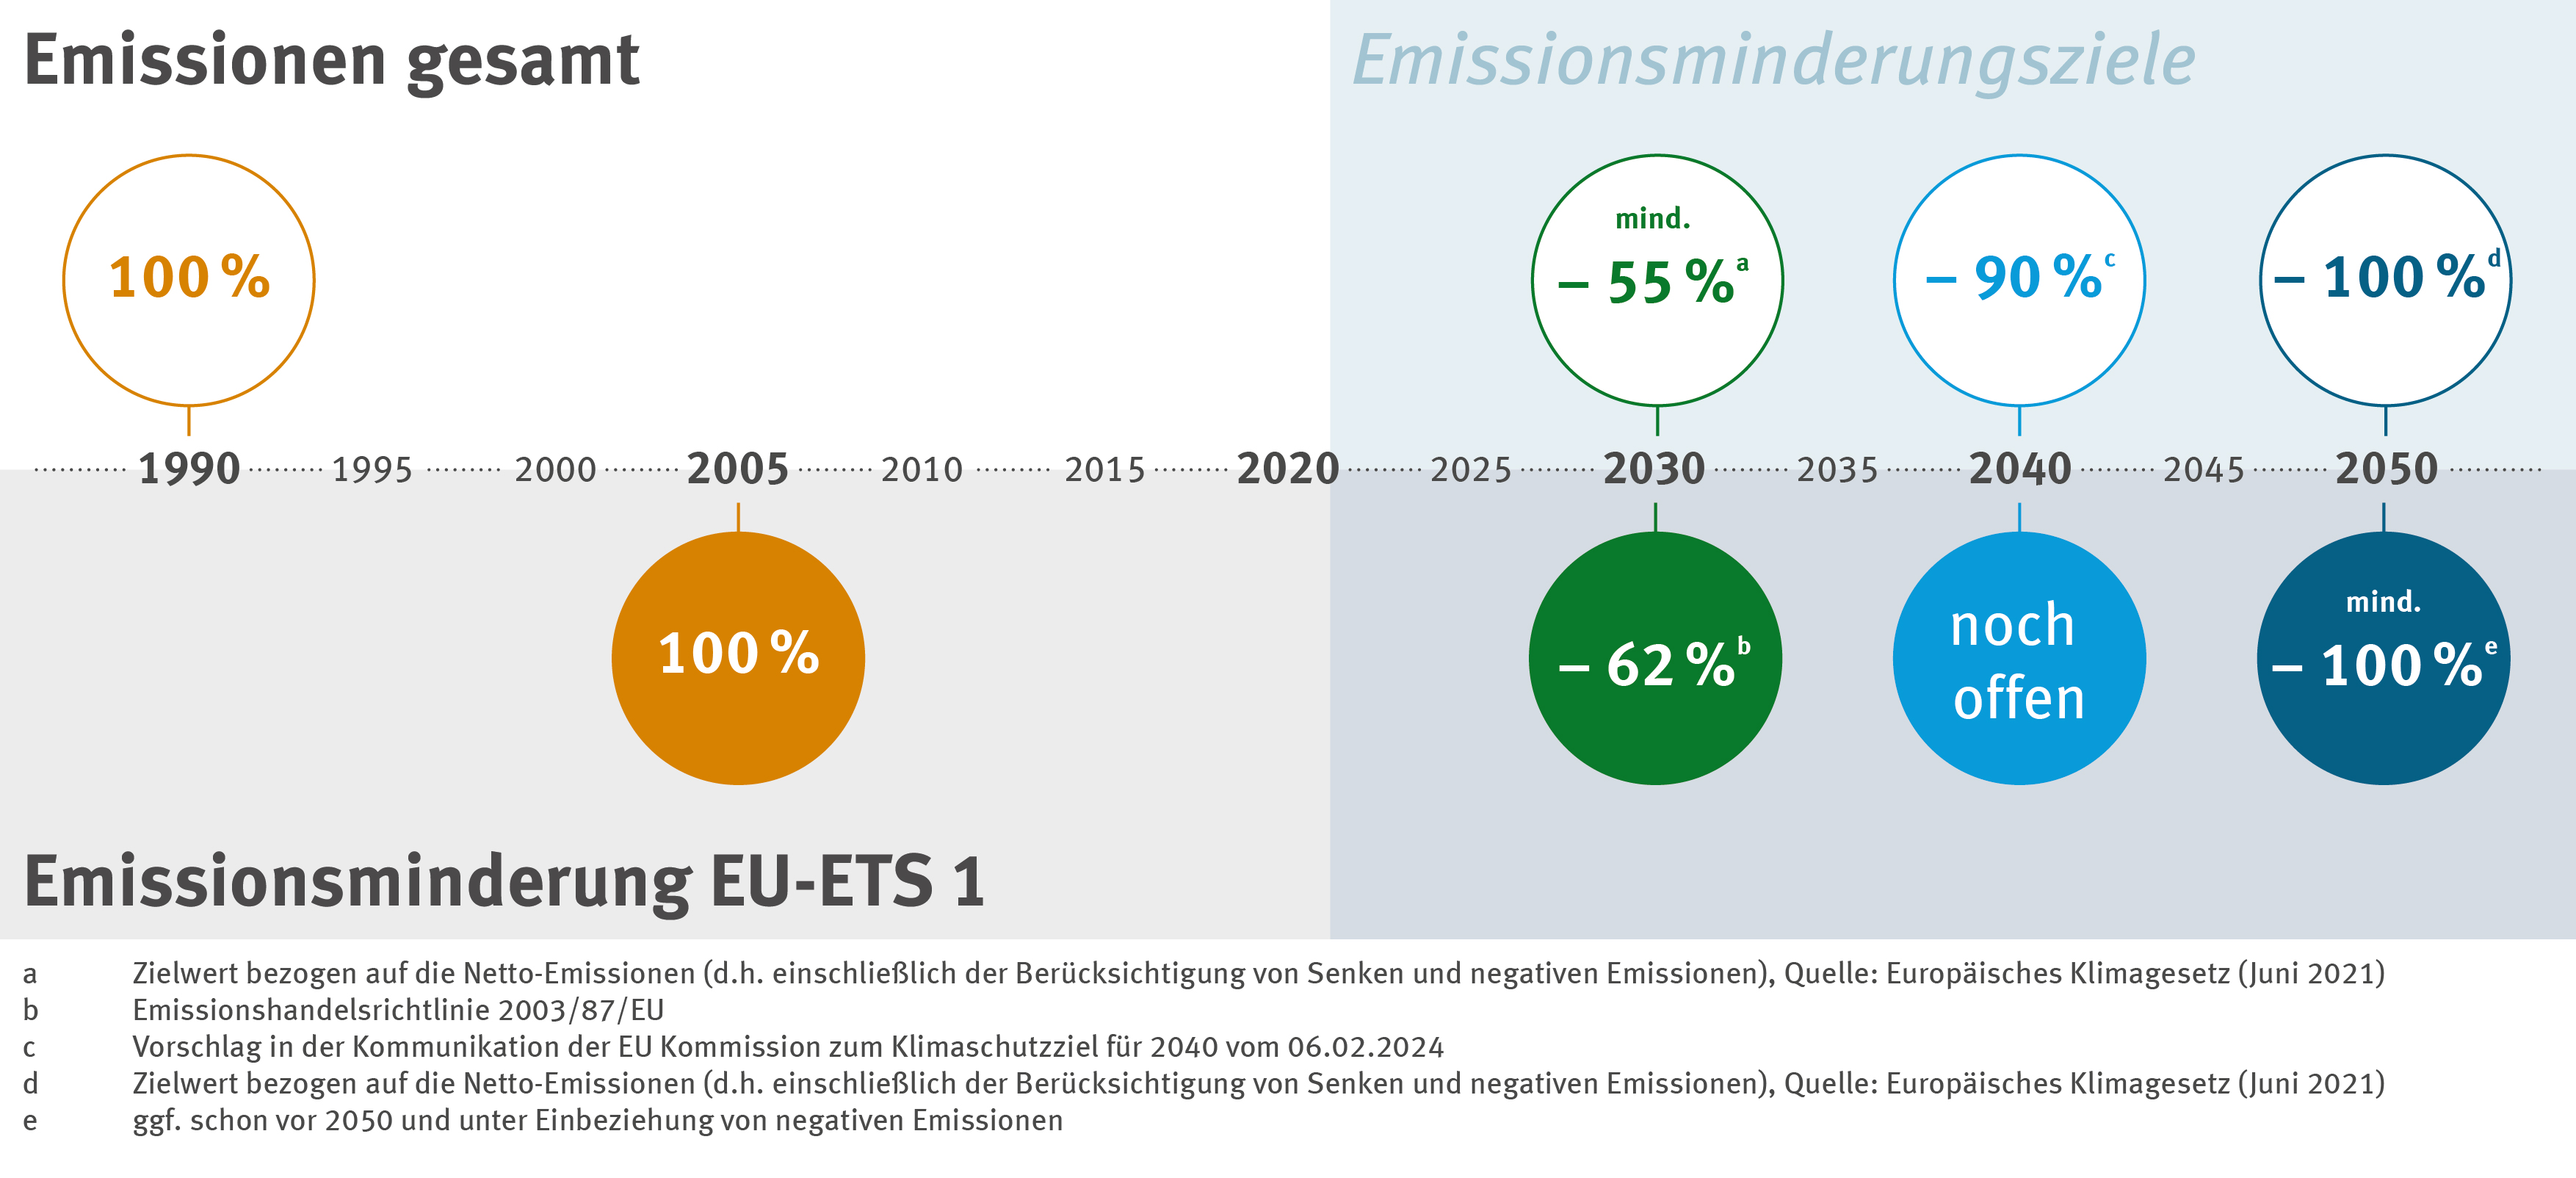 Emissionsminderung im EU-ETS